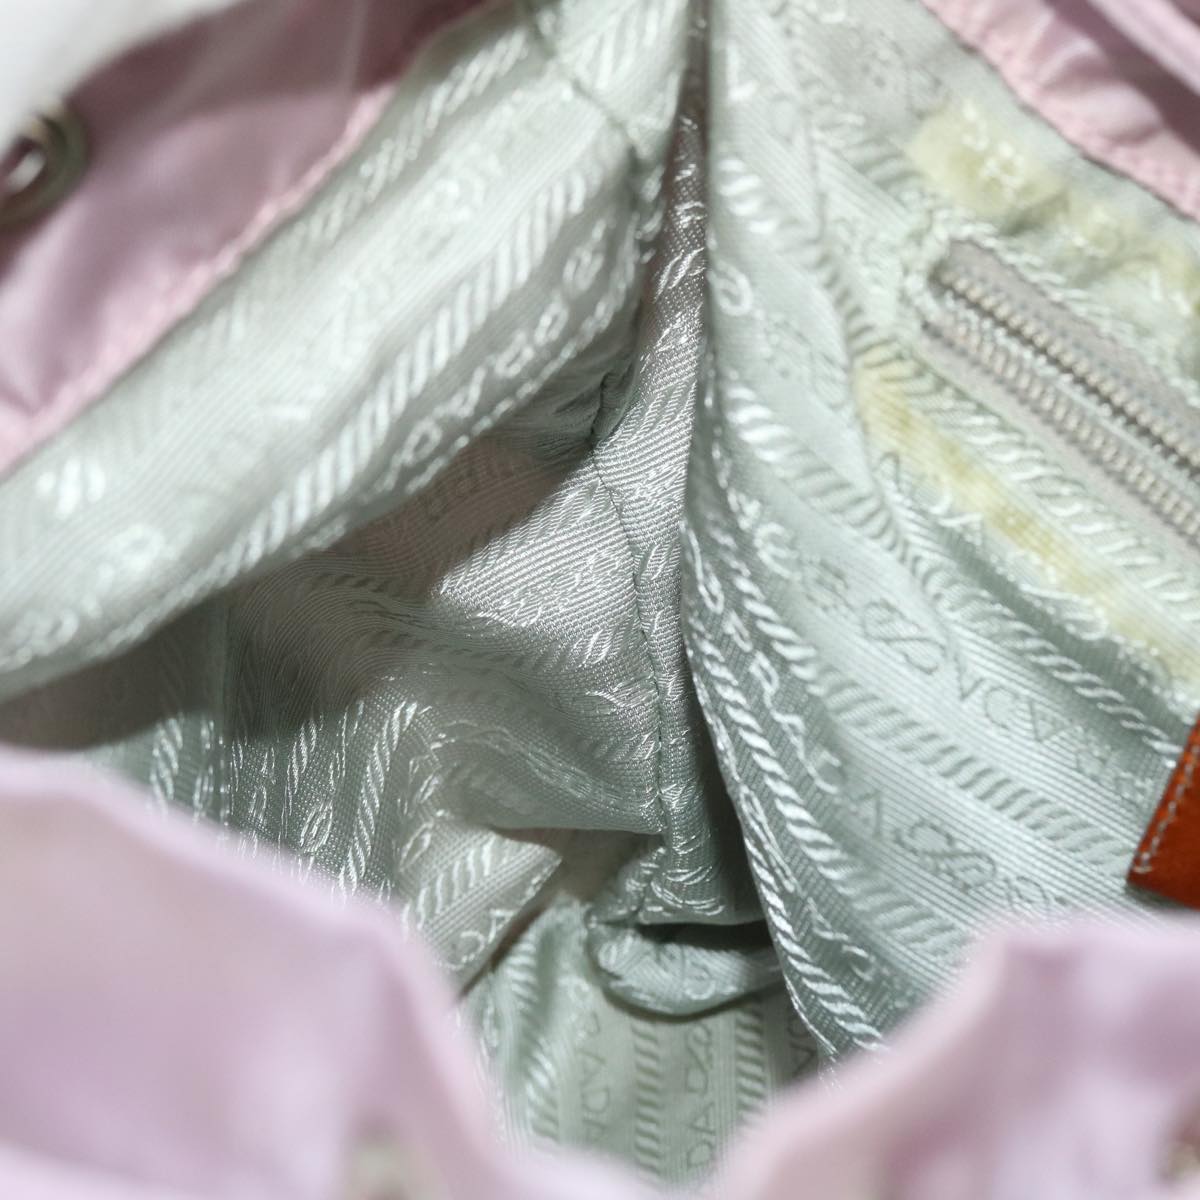 PRADA Backpack Nylon Pink Auth ki3411